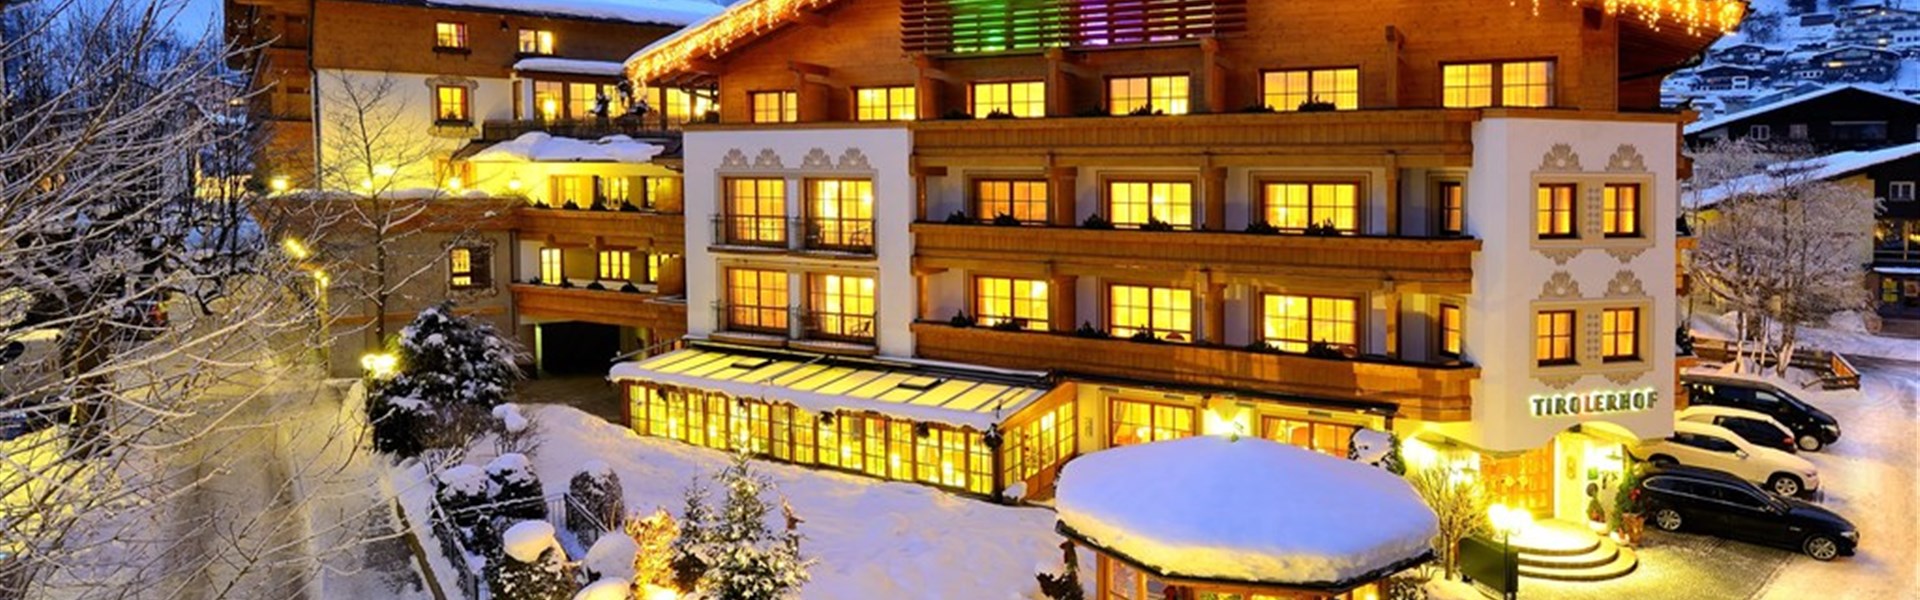 Hotel Tirolerhof (W) - 